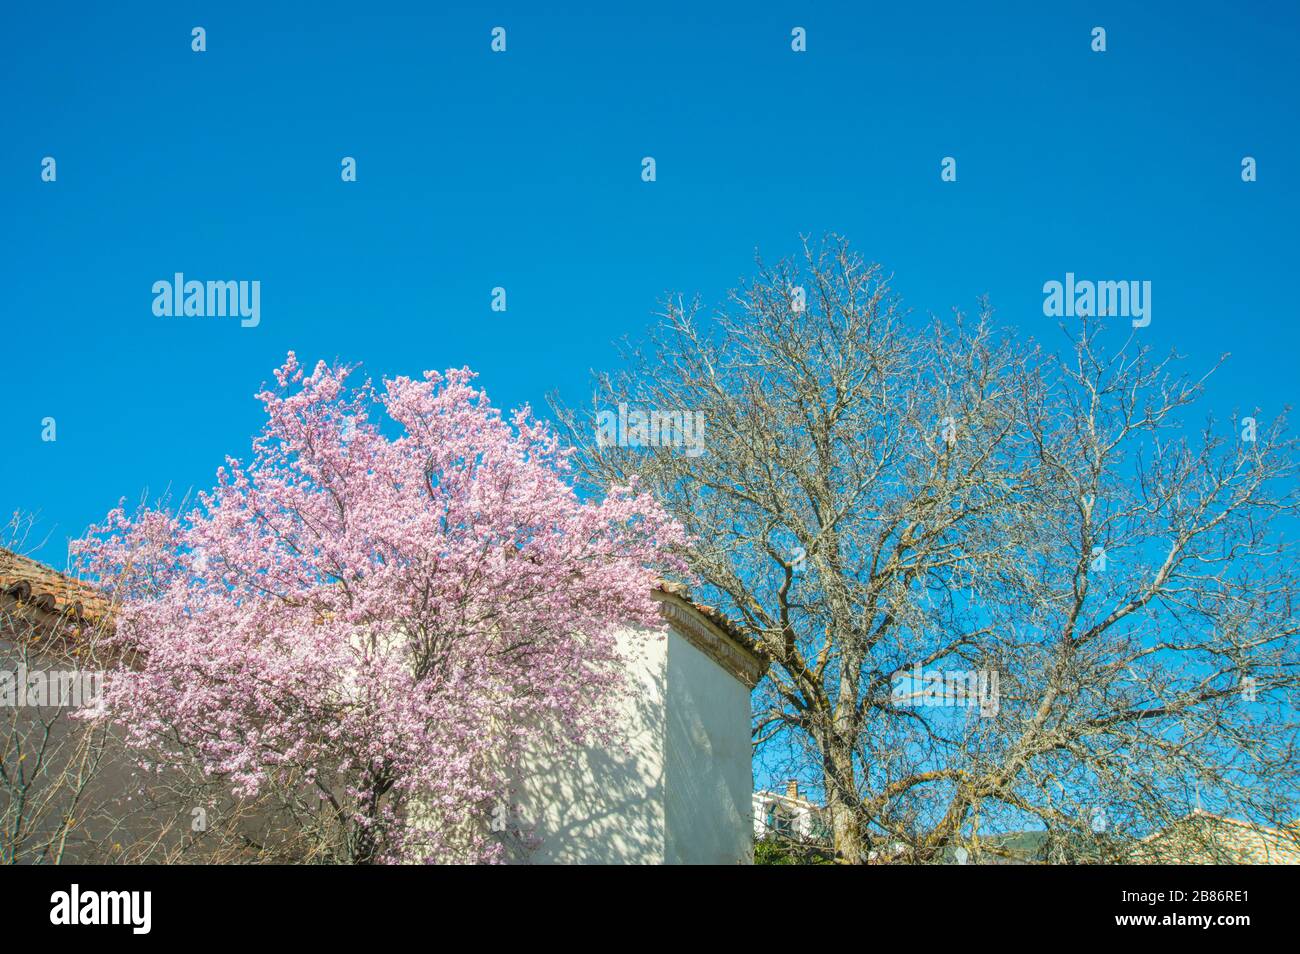 Flowered tree and whitered tree. Stock Photo